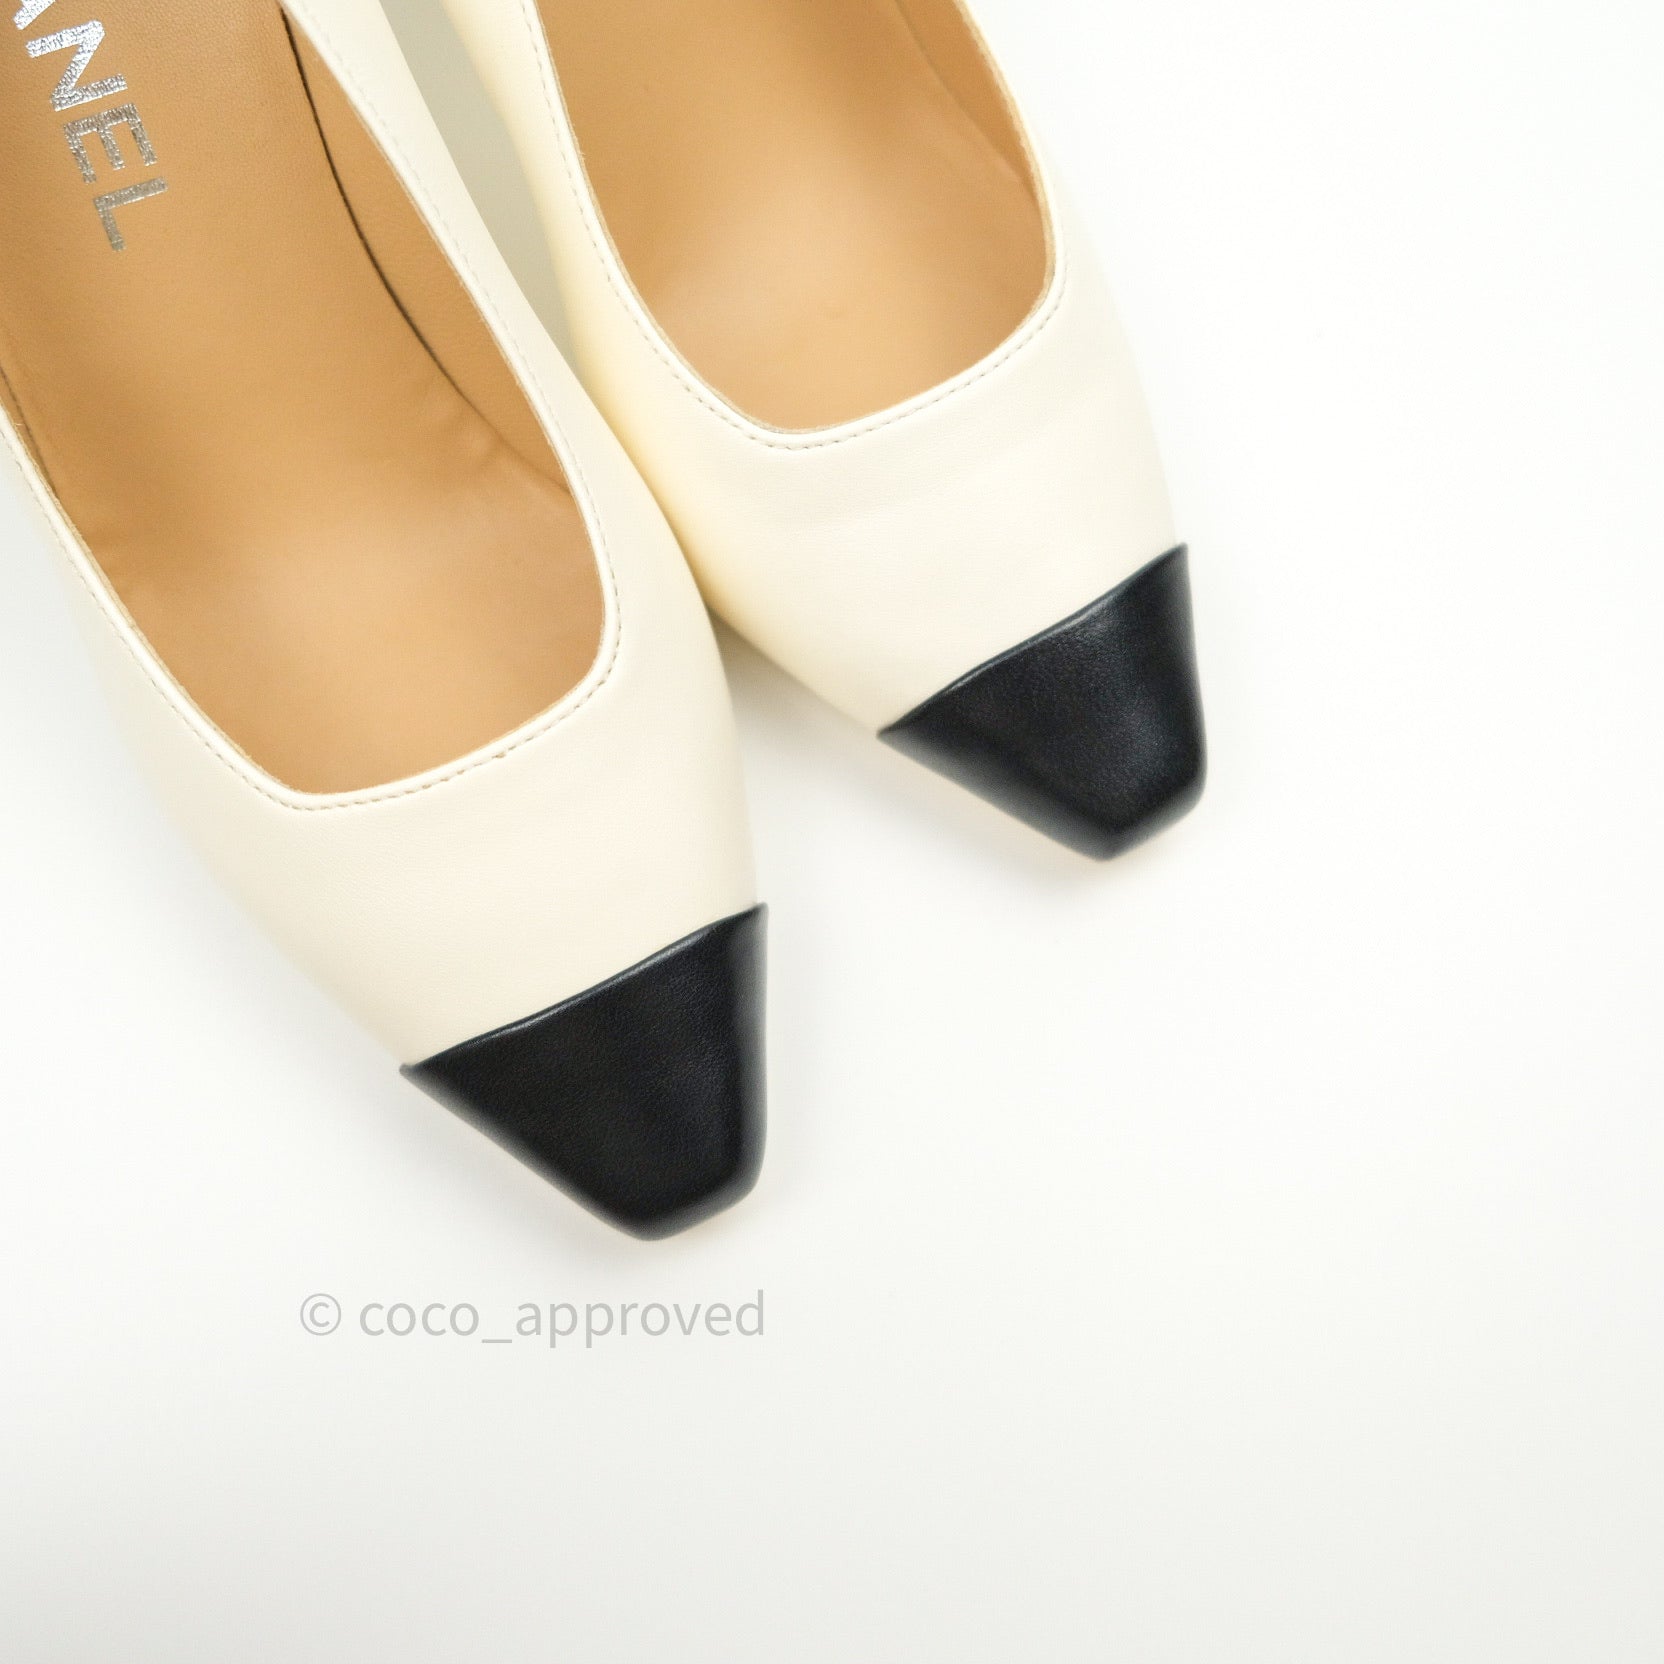 vintage chanel white dress shoes